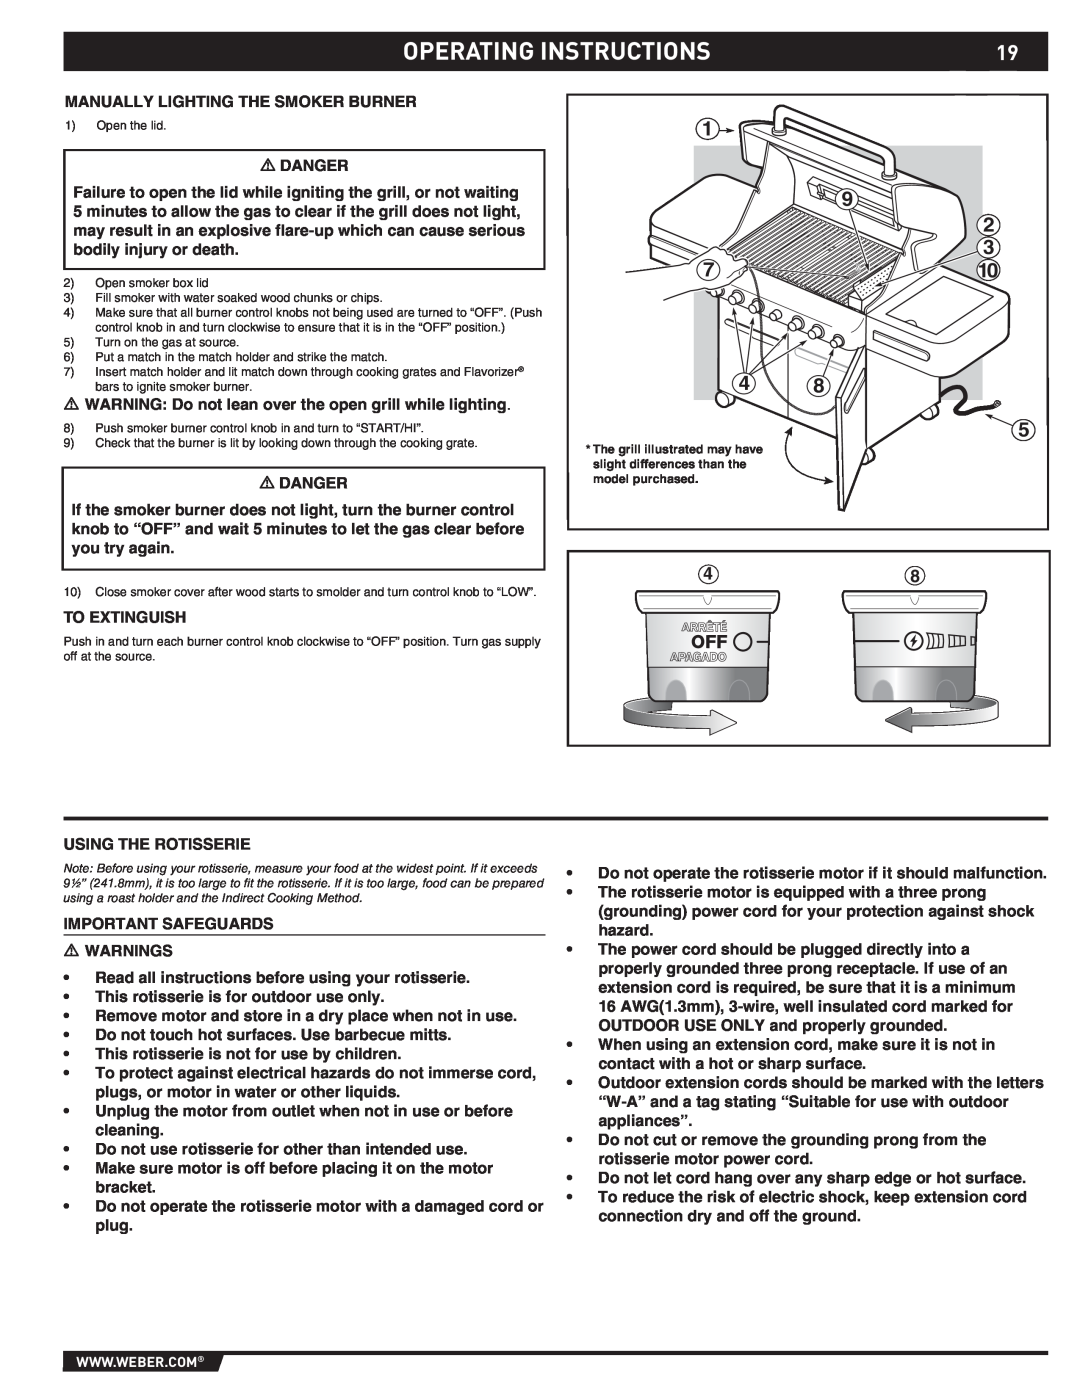 Weber S-470TM manual Operating Instructions 